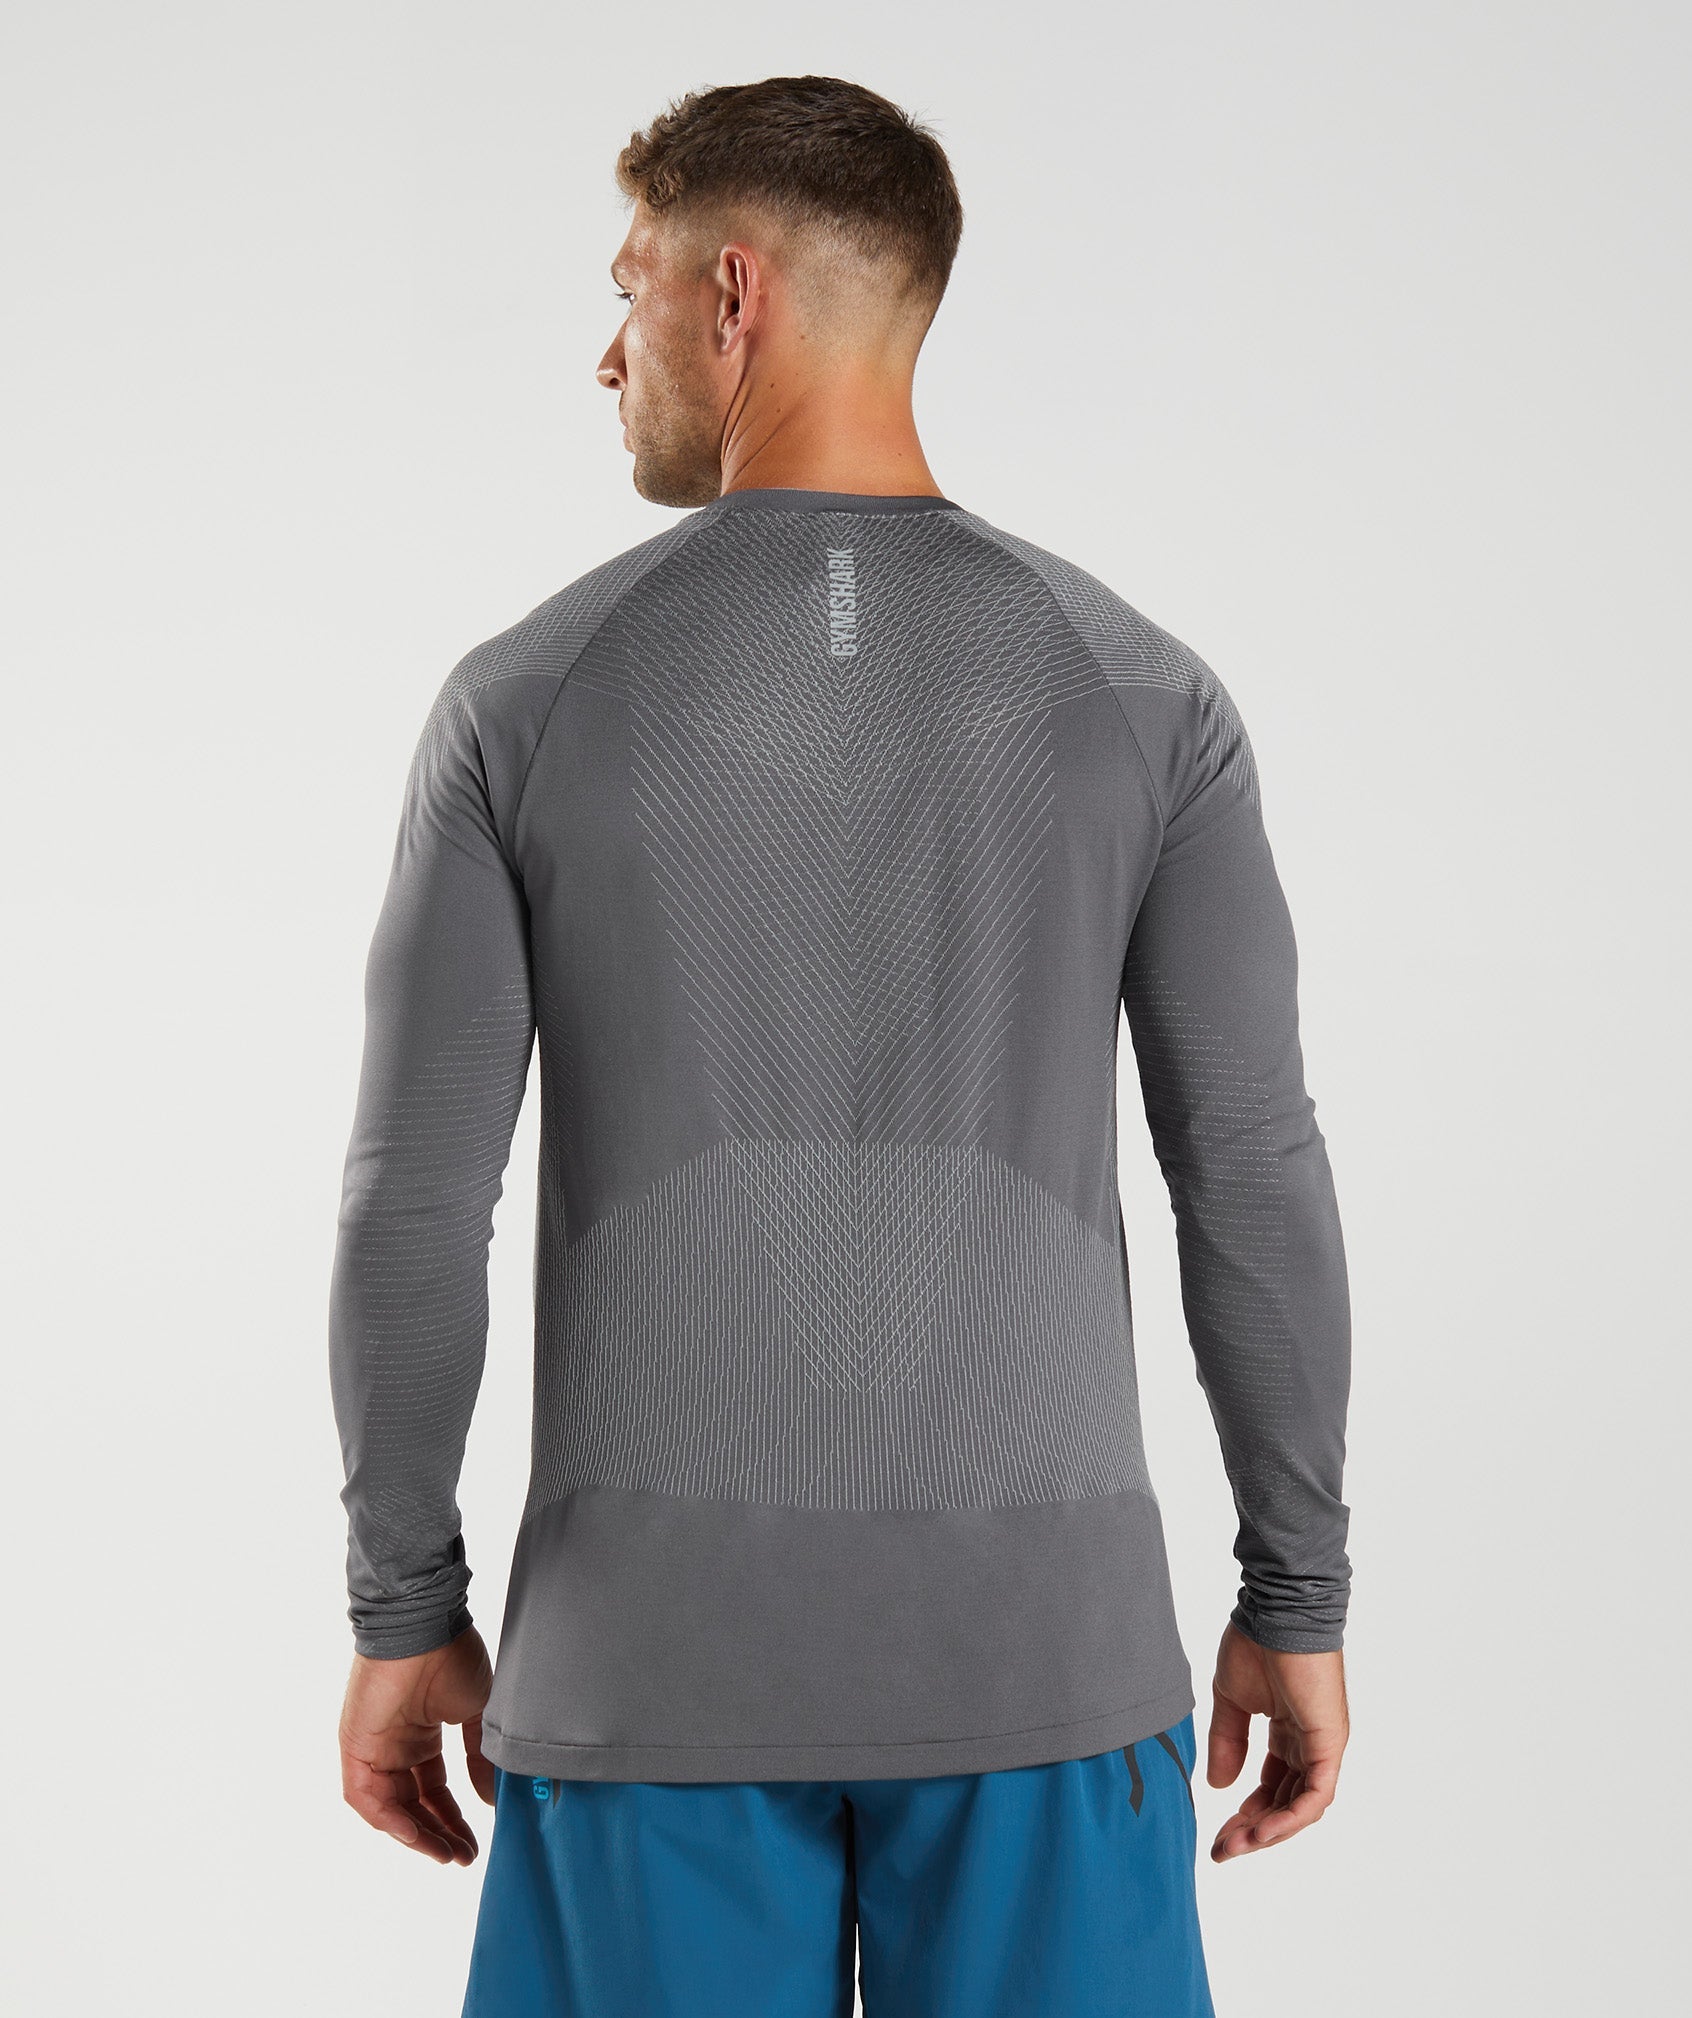 Gymshark Apex T-Shirt - Light Grey/Smokey Grey